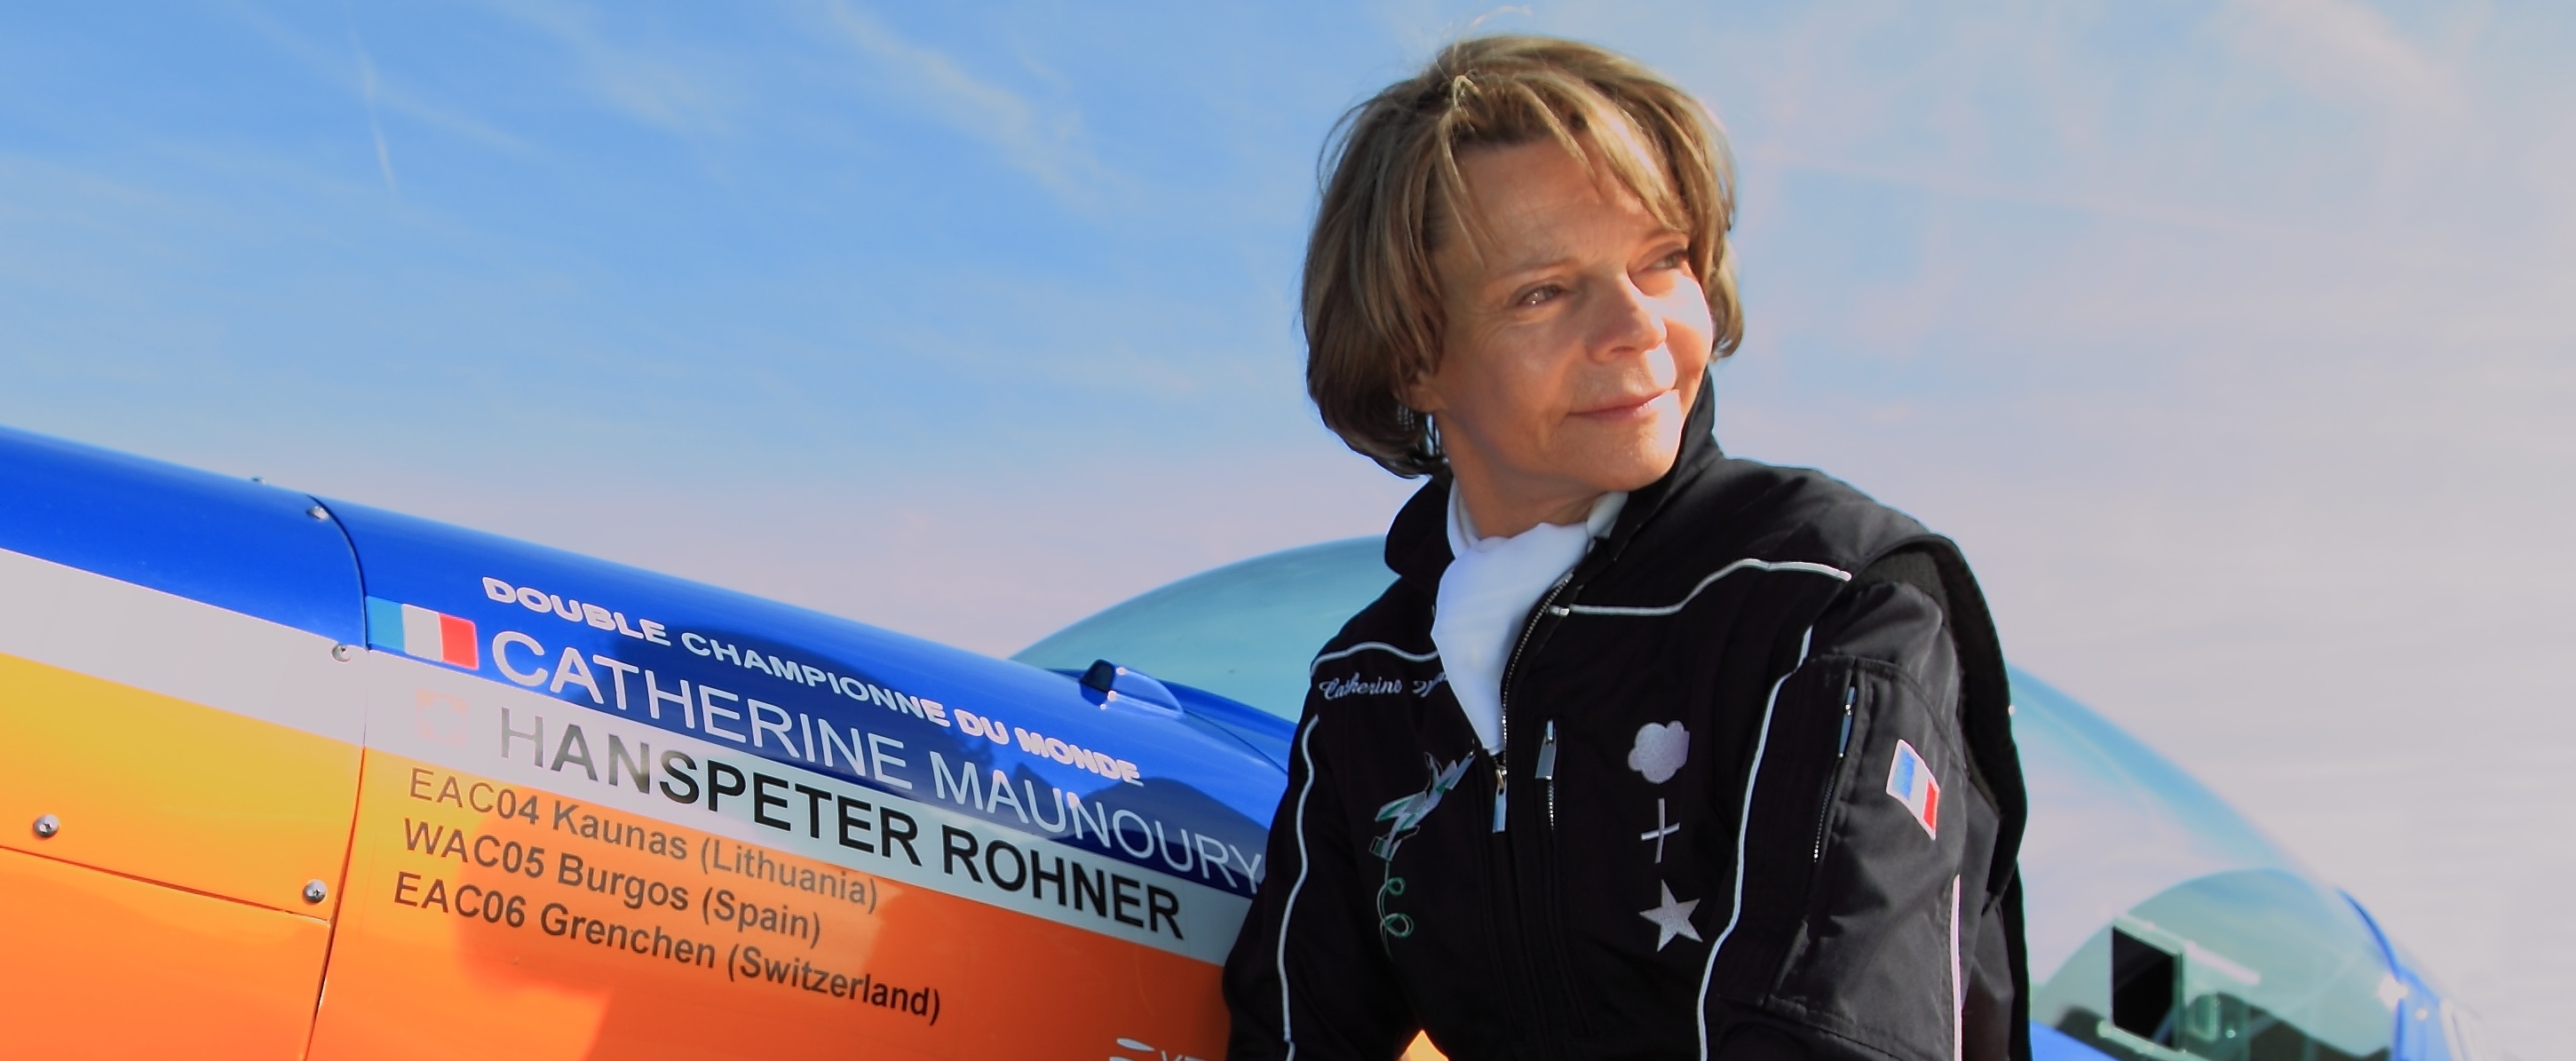 Catherine Maunoury pilot double world champion